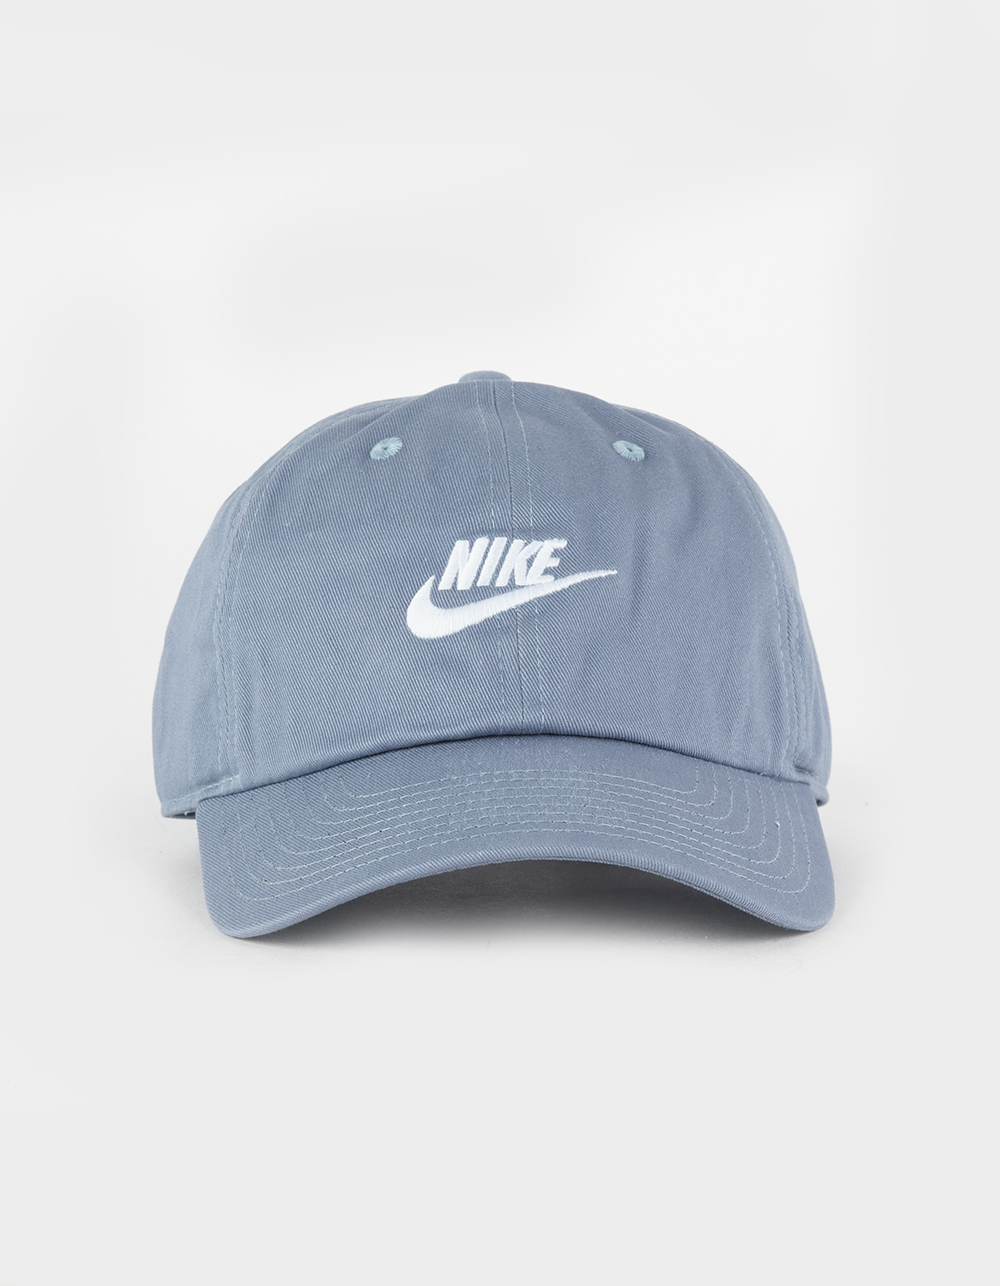 Nike Unisex Heritage 86 Sportswear Futura Twill Hat (One Size, White/Black)